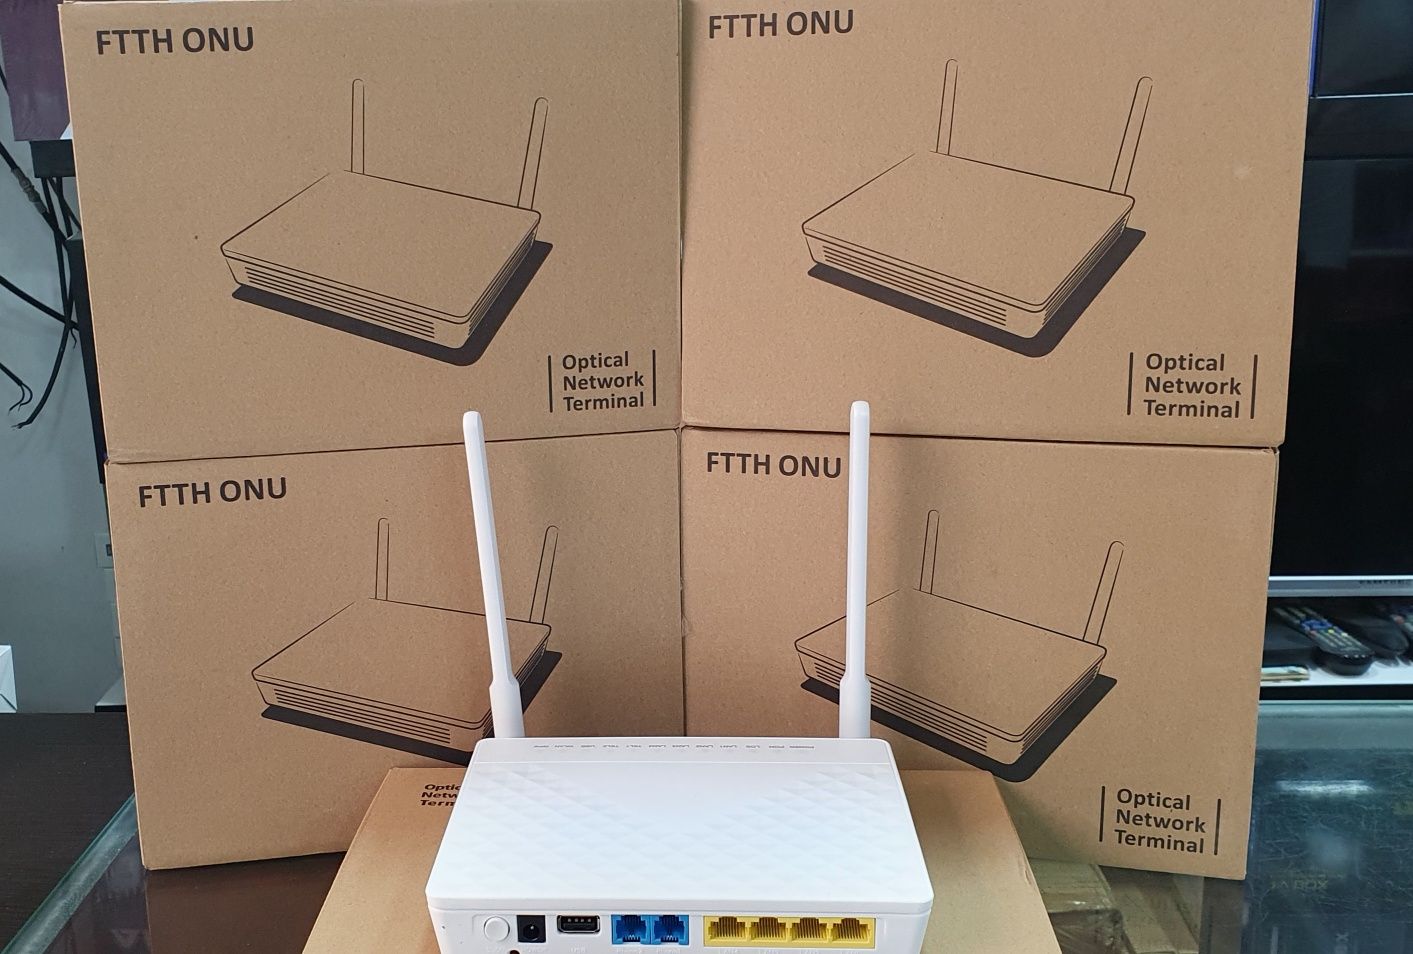 Gpon router, Жпон роутер HG8245MCUS
Спецификация 4FE + 2POT + 1USB + 2